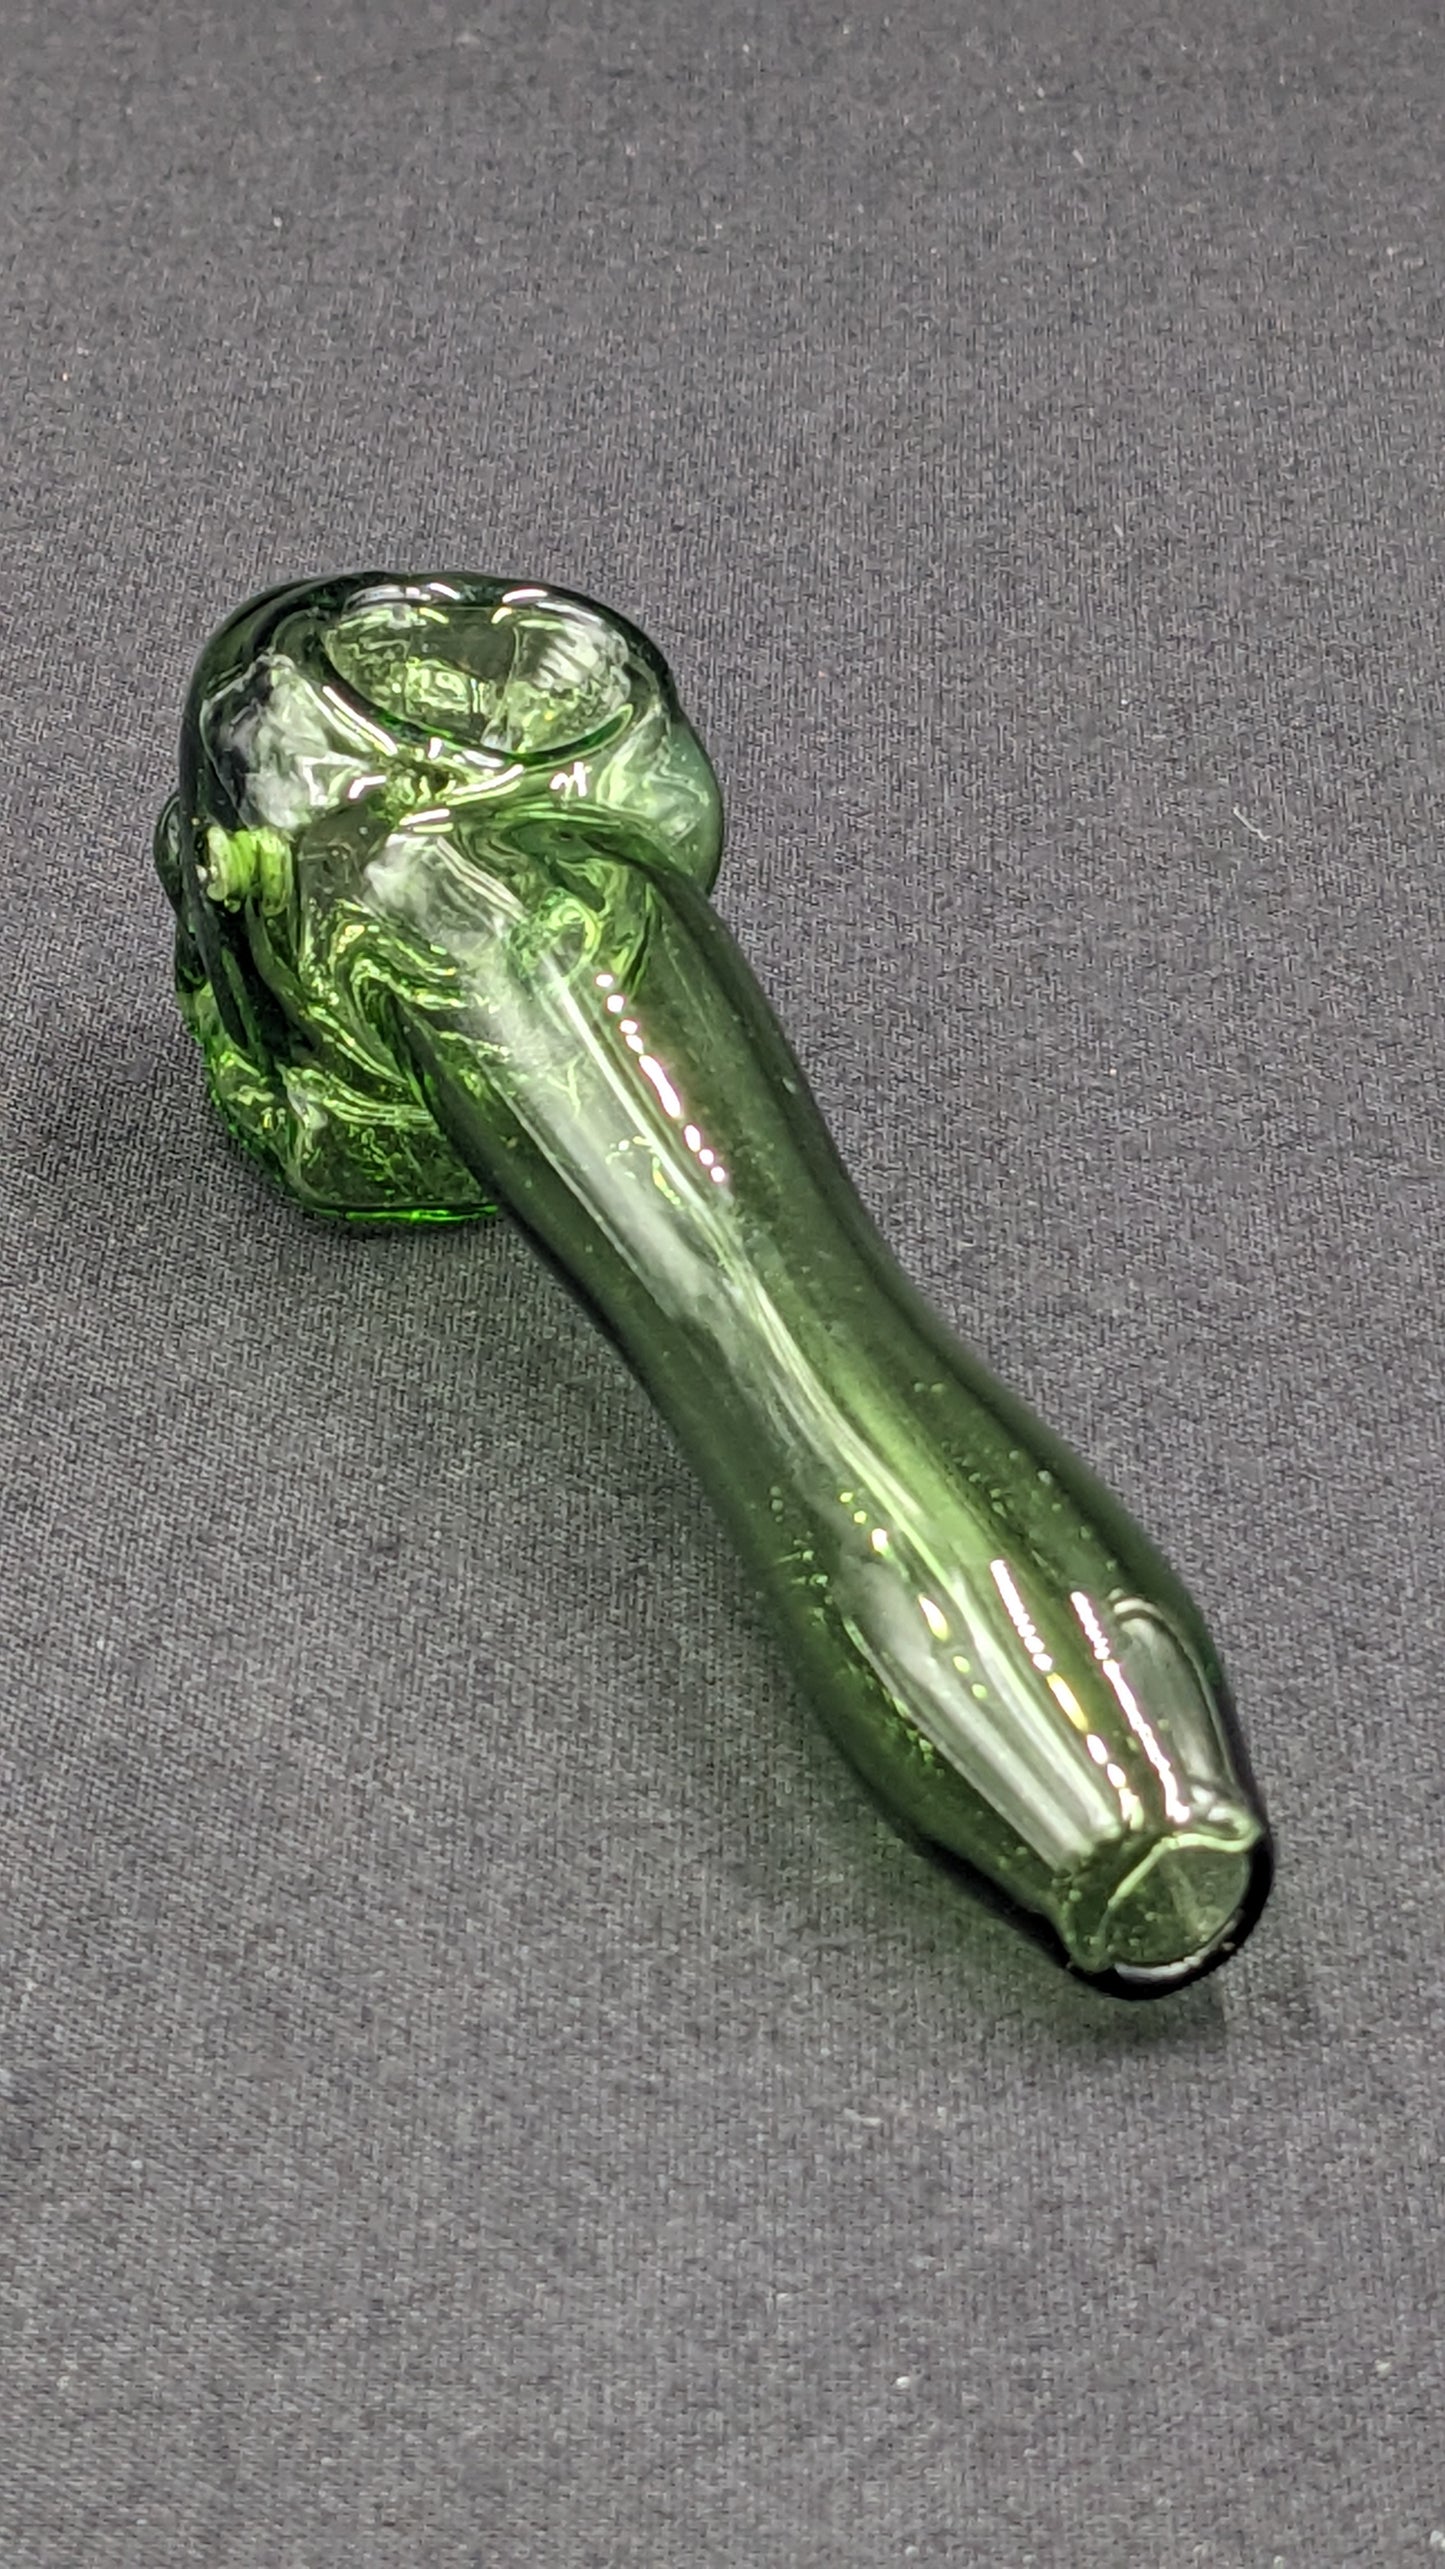 4" Glass Spoon Skull Green